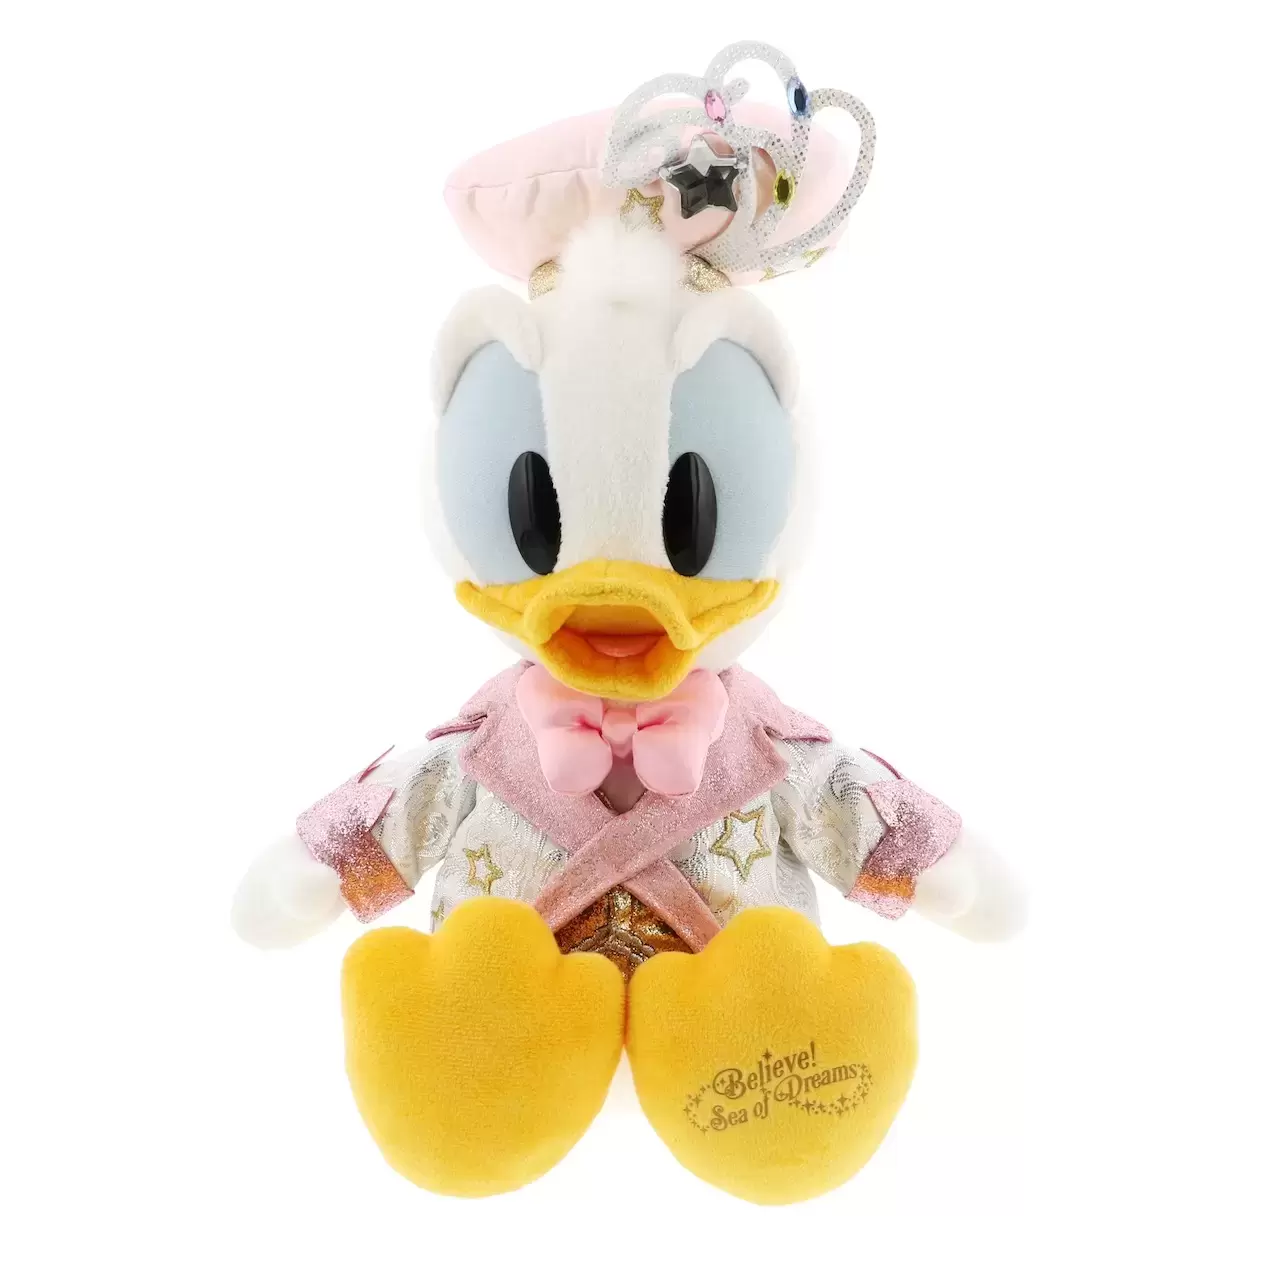 Peluches Disney Store - Mickey And Friends - Donald [Tokyo Disneysea. Believe! sea of dreams]